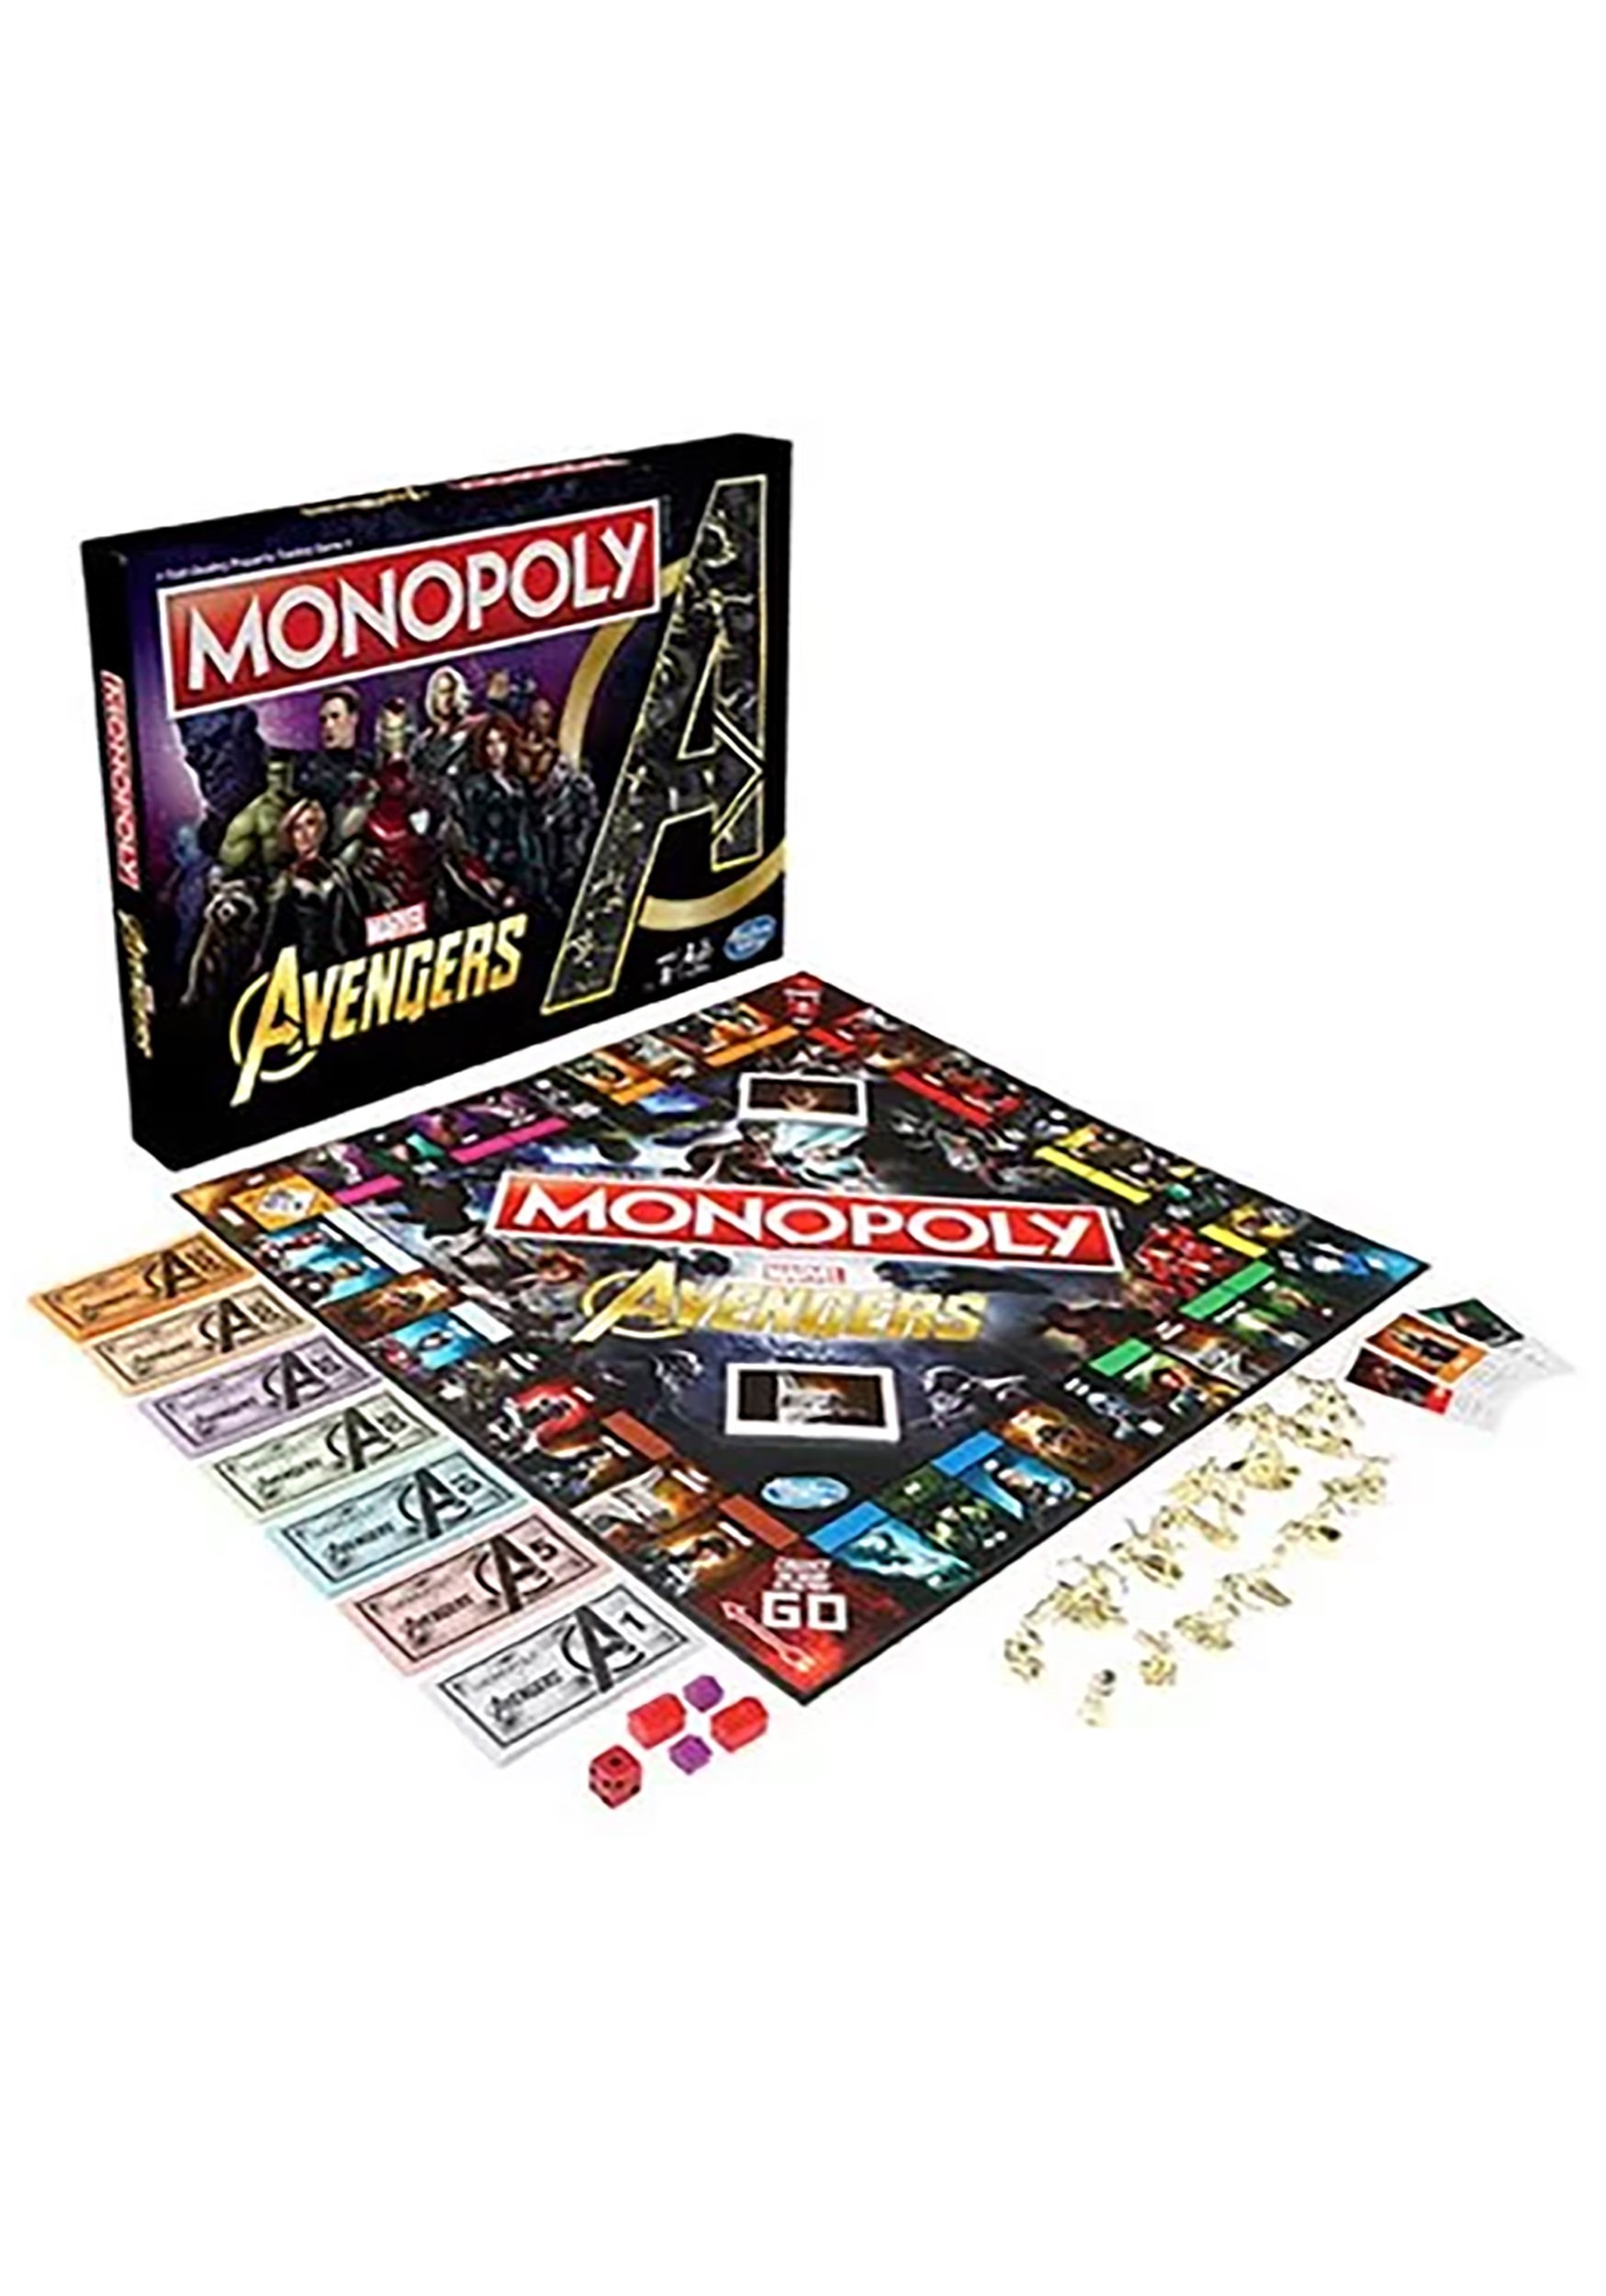 Monopoly Avengers Endgame Edition Game